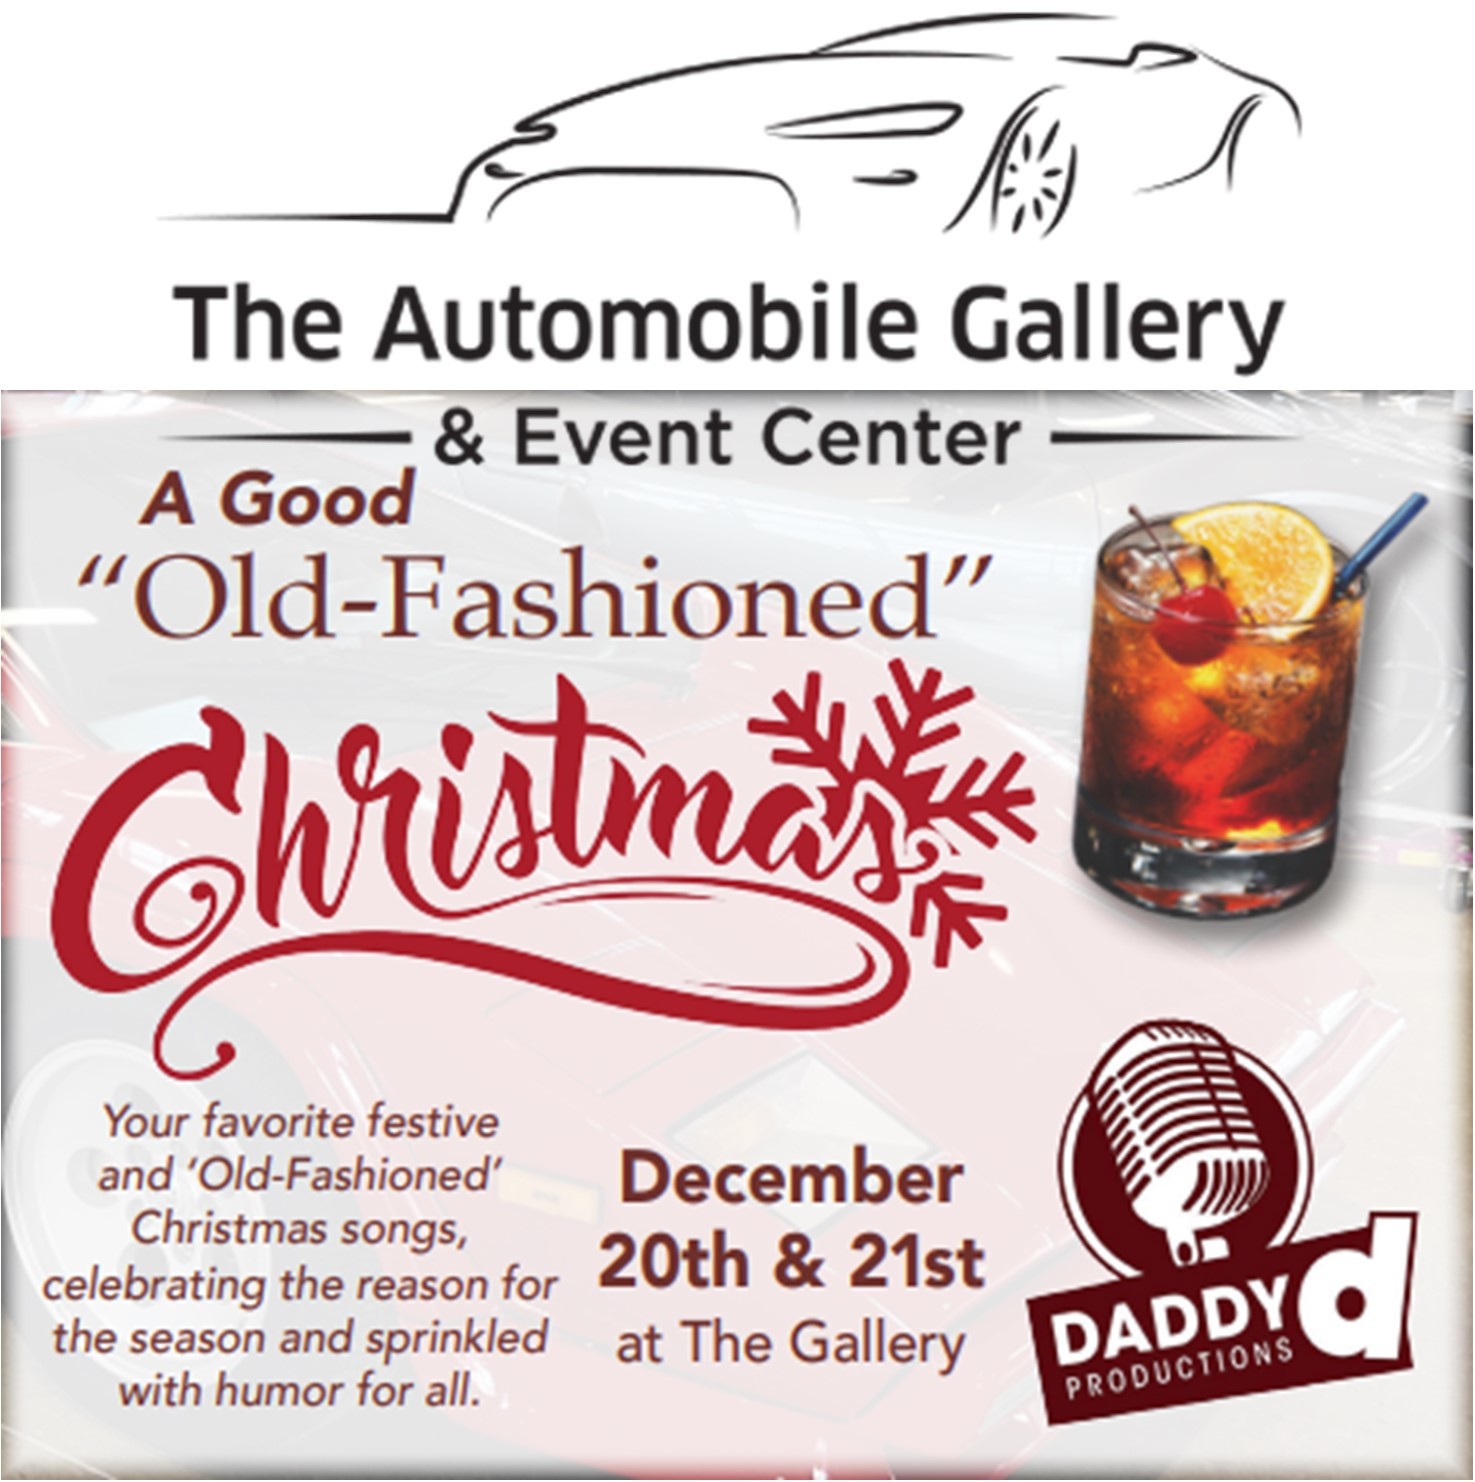 Automobile Gallery "Old Fashion Christmas" Dec 20 & 21